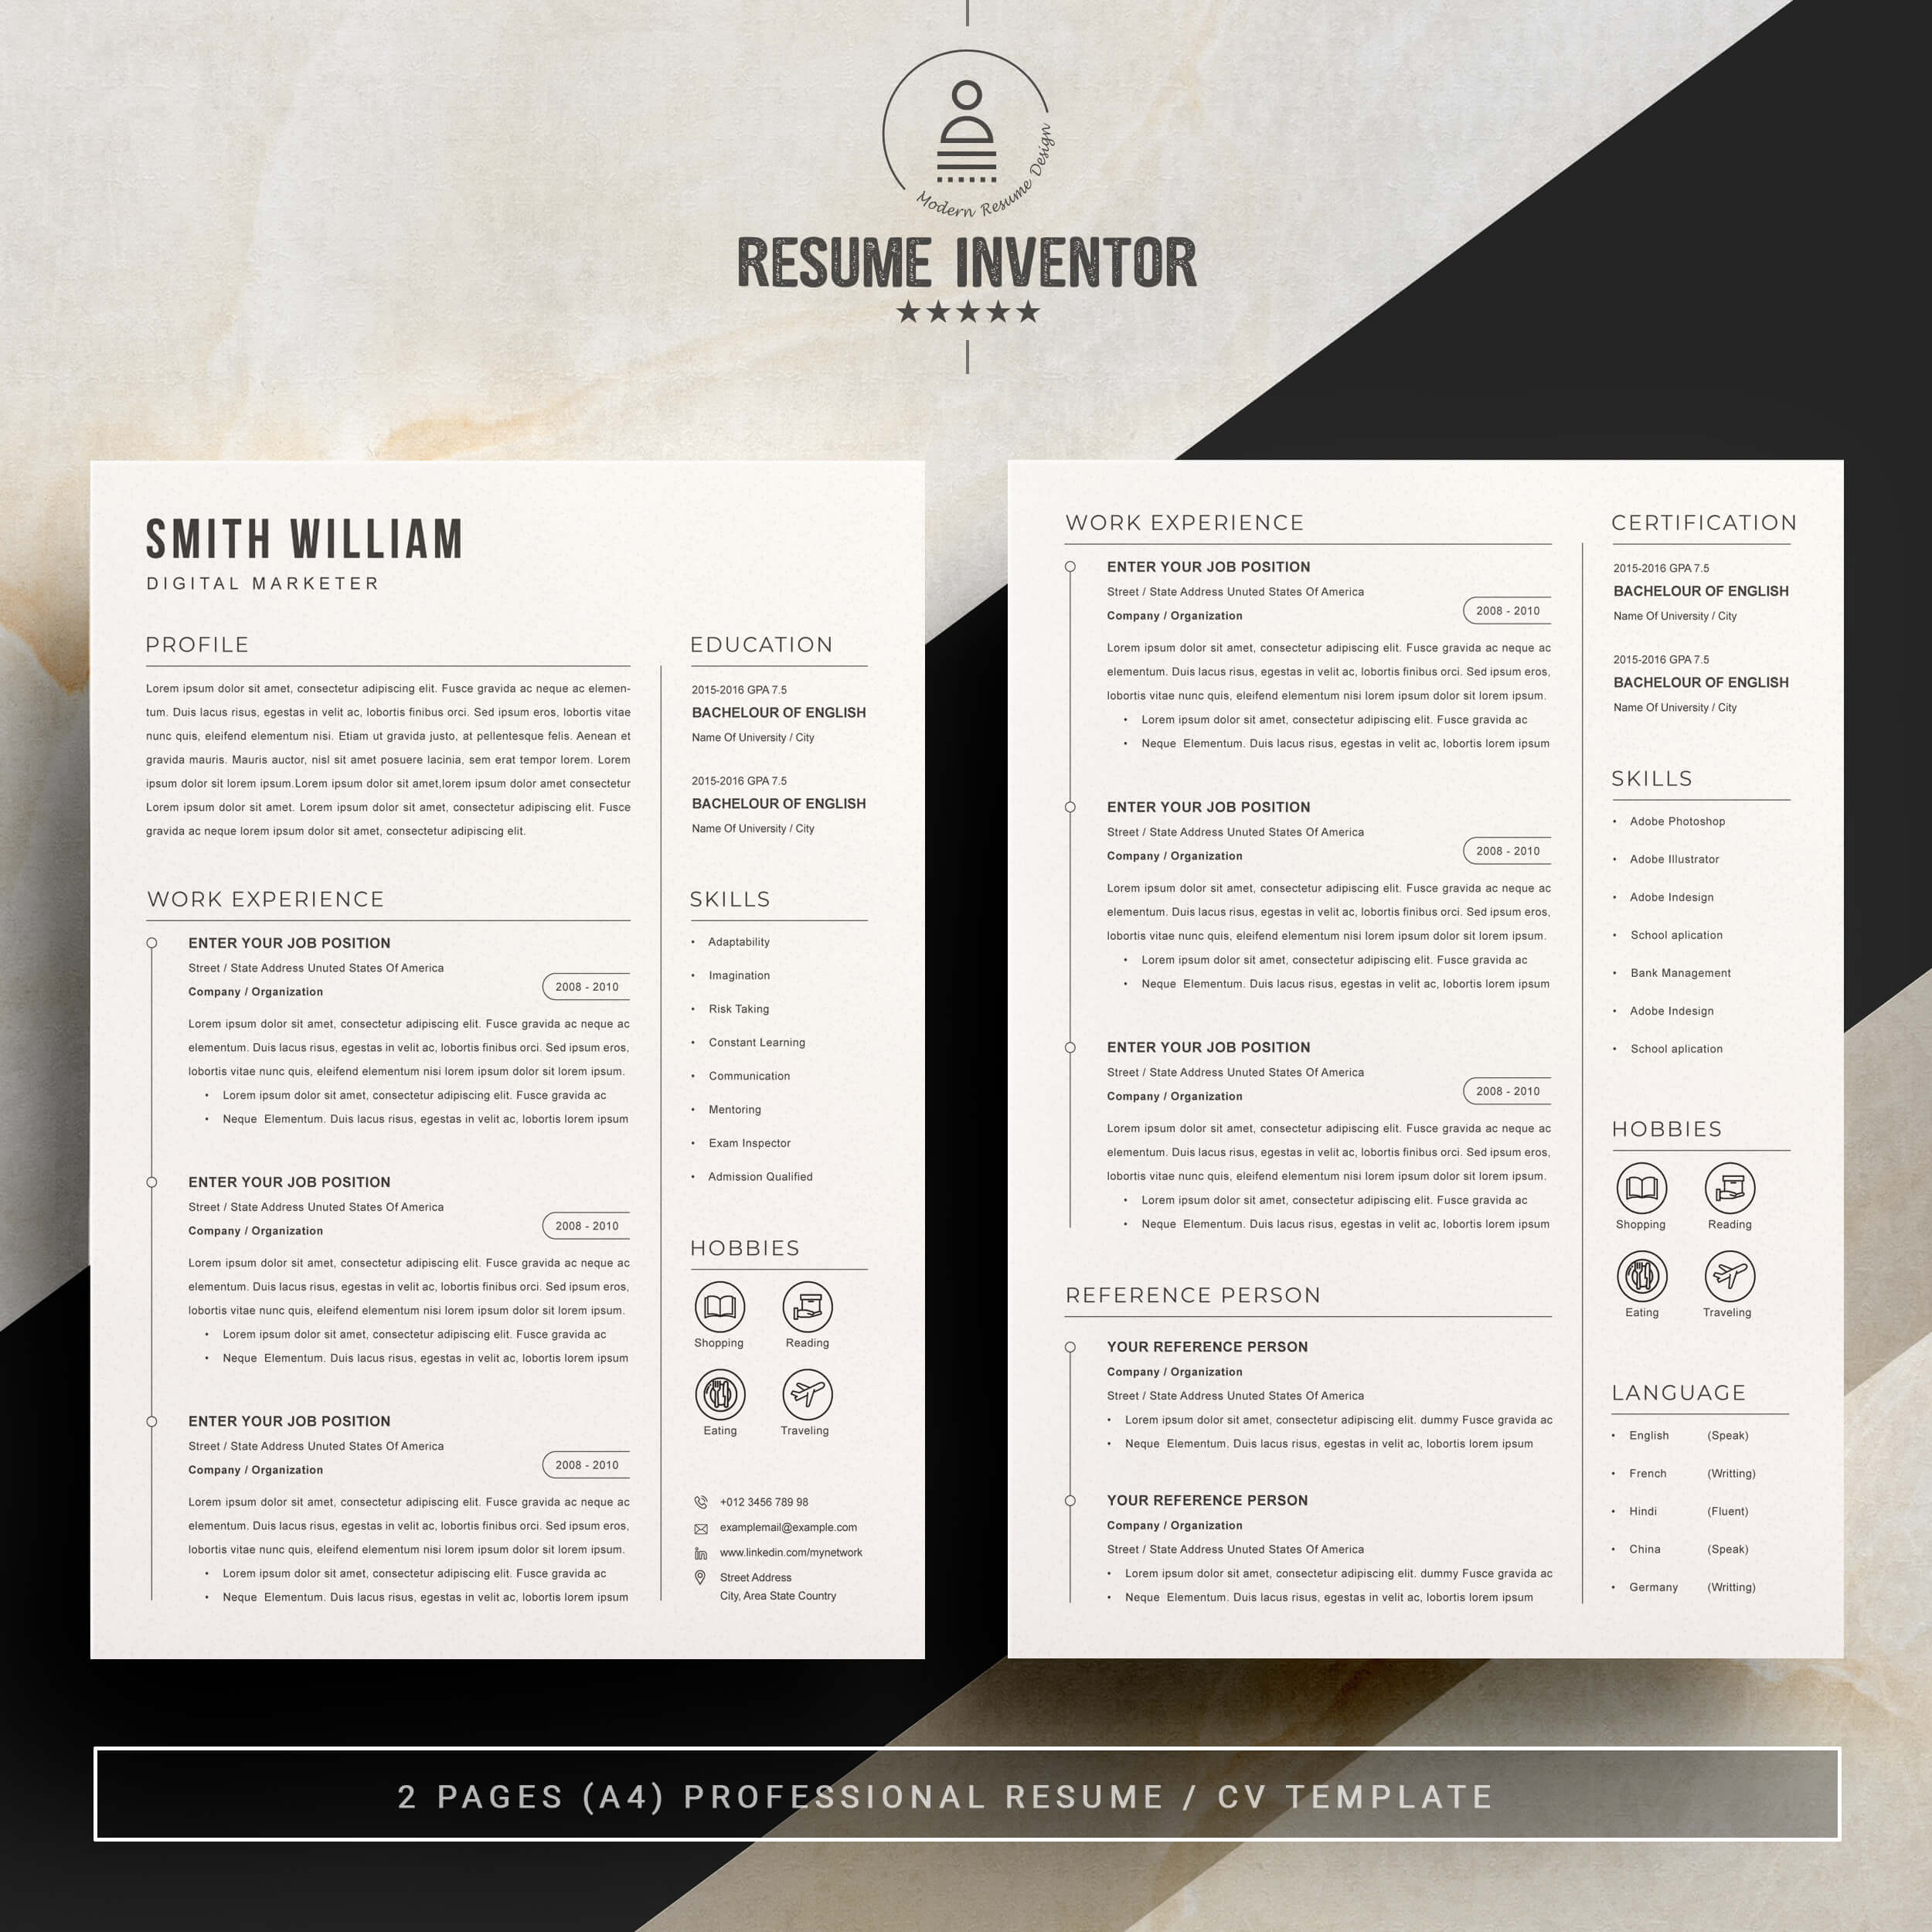 Digital Marketer CV & Resume Template | Modern Resume Template Word Format preview image.